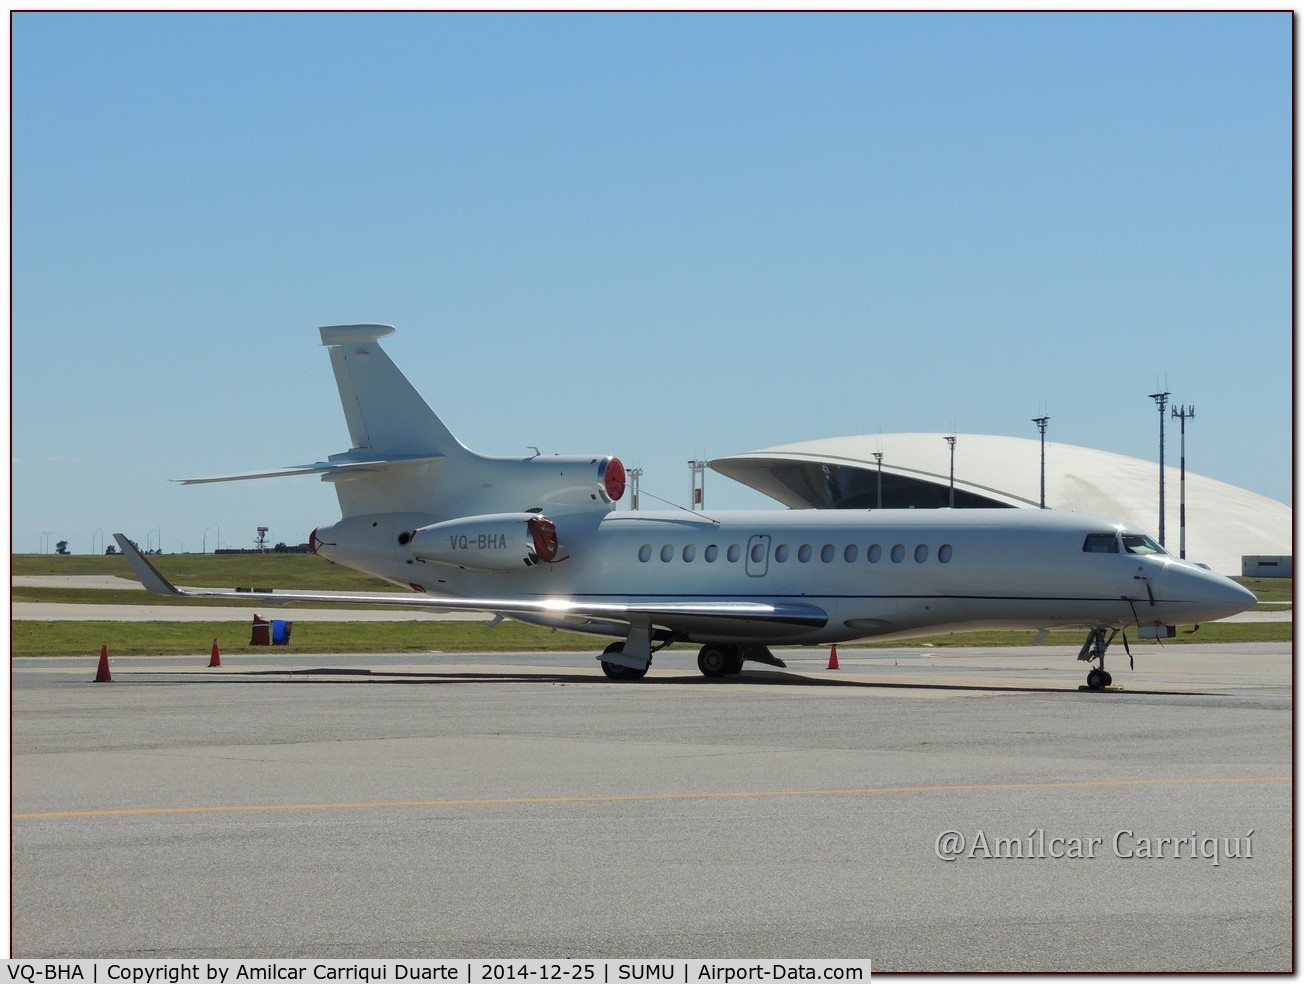 VQ-BHA, 2009 Dassault Falcon 7X C/N 84, Landed at SUMU